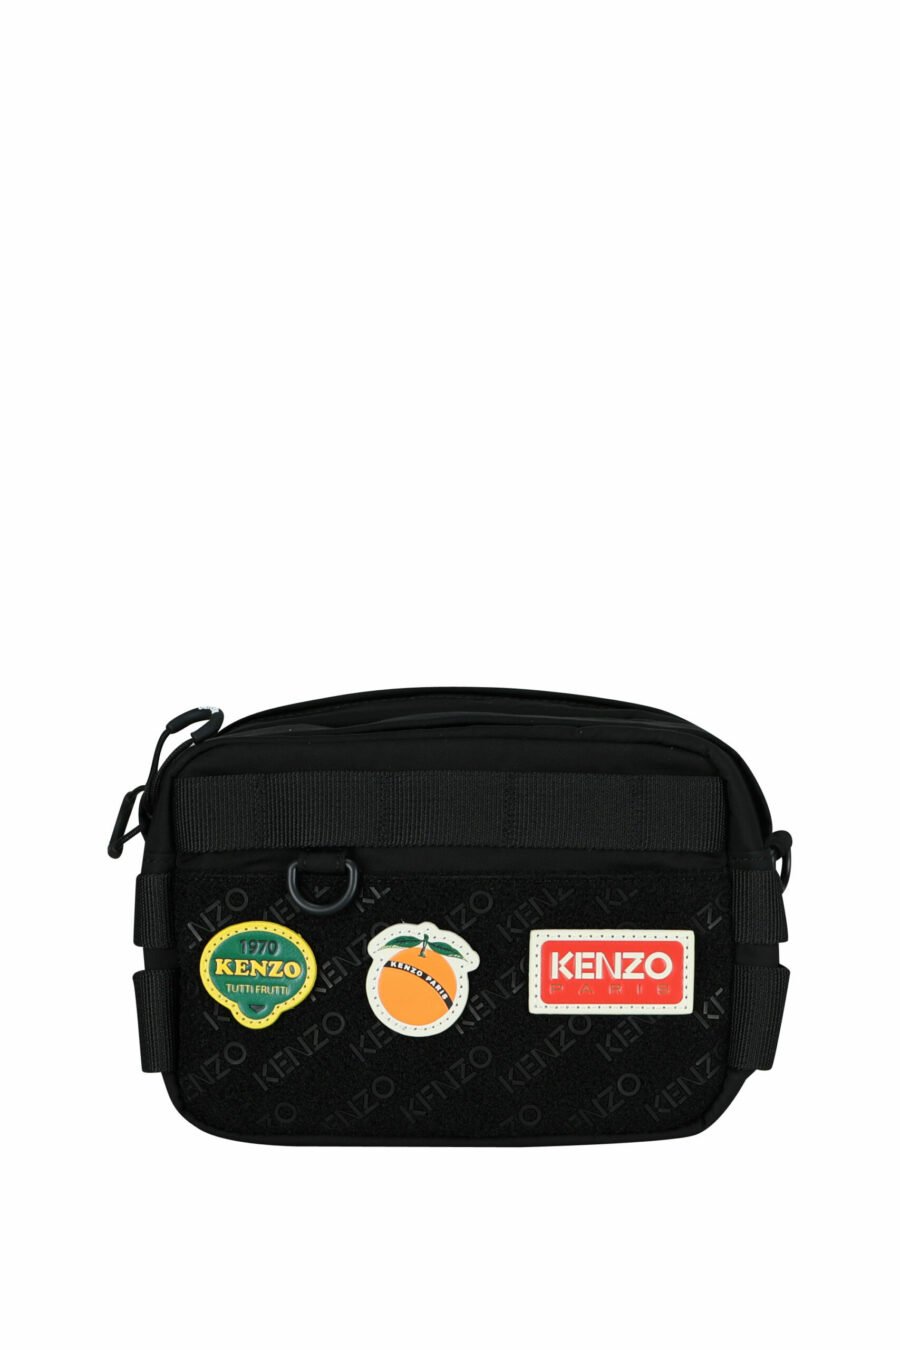 Black crossbody bag with "kenzo jungle" logo - 3612230603738 scaled